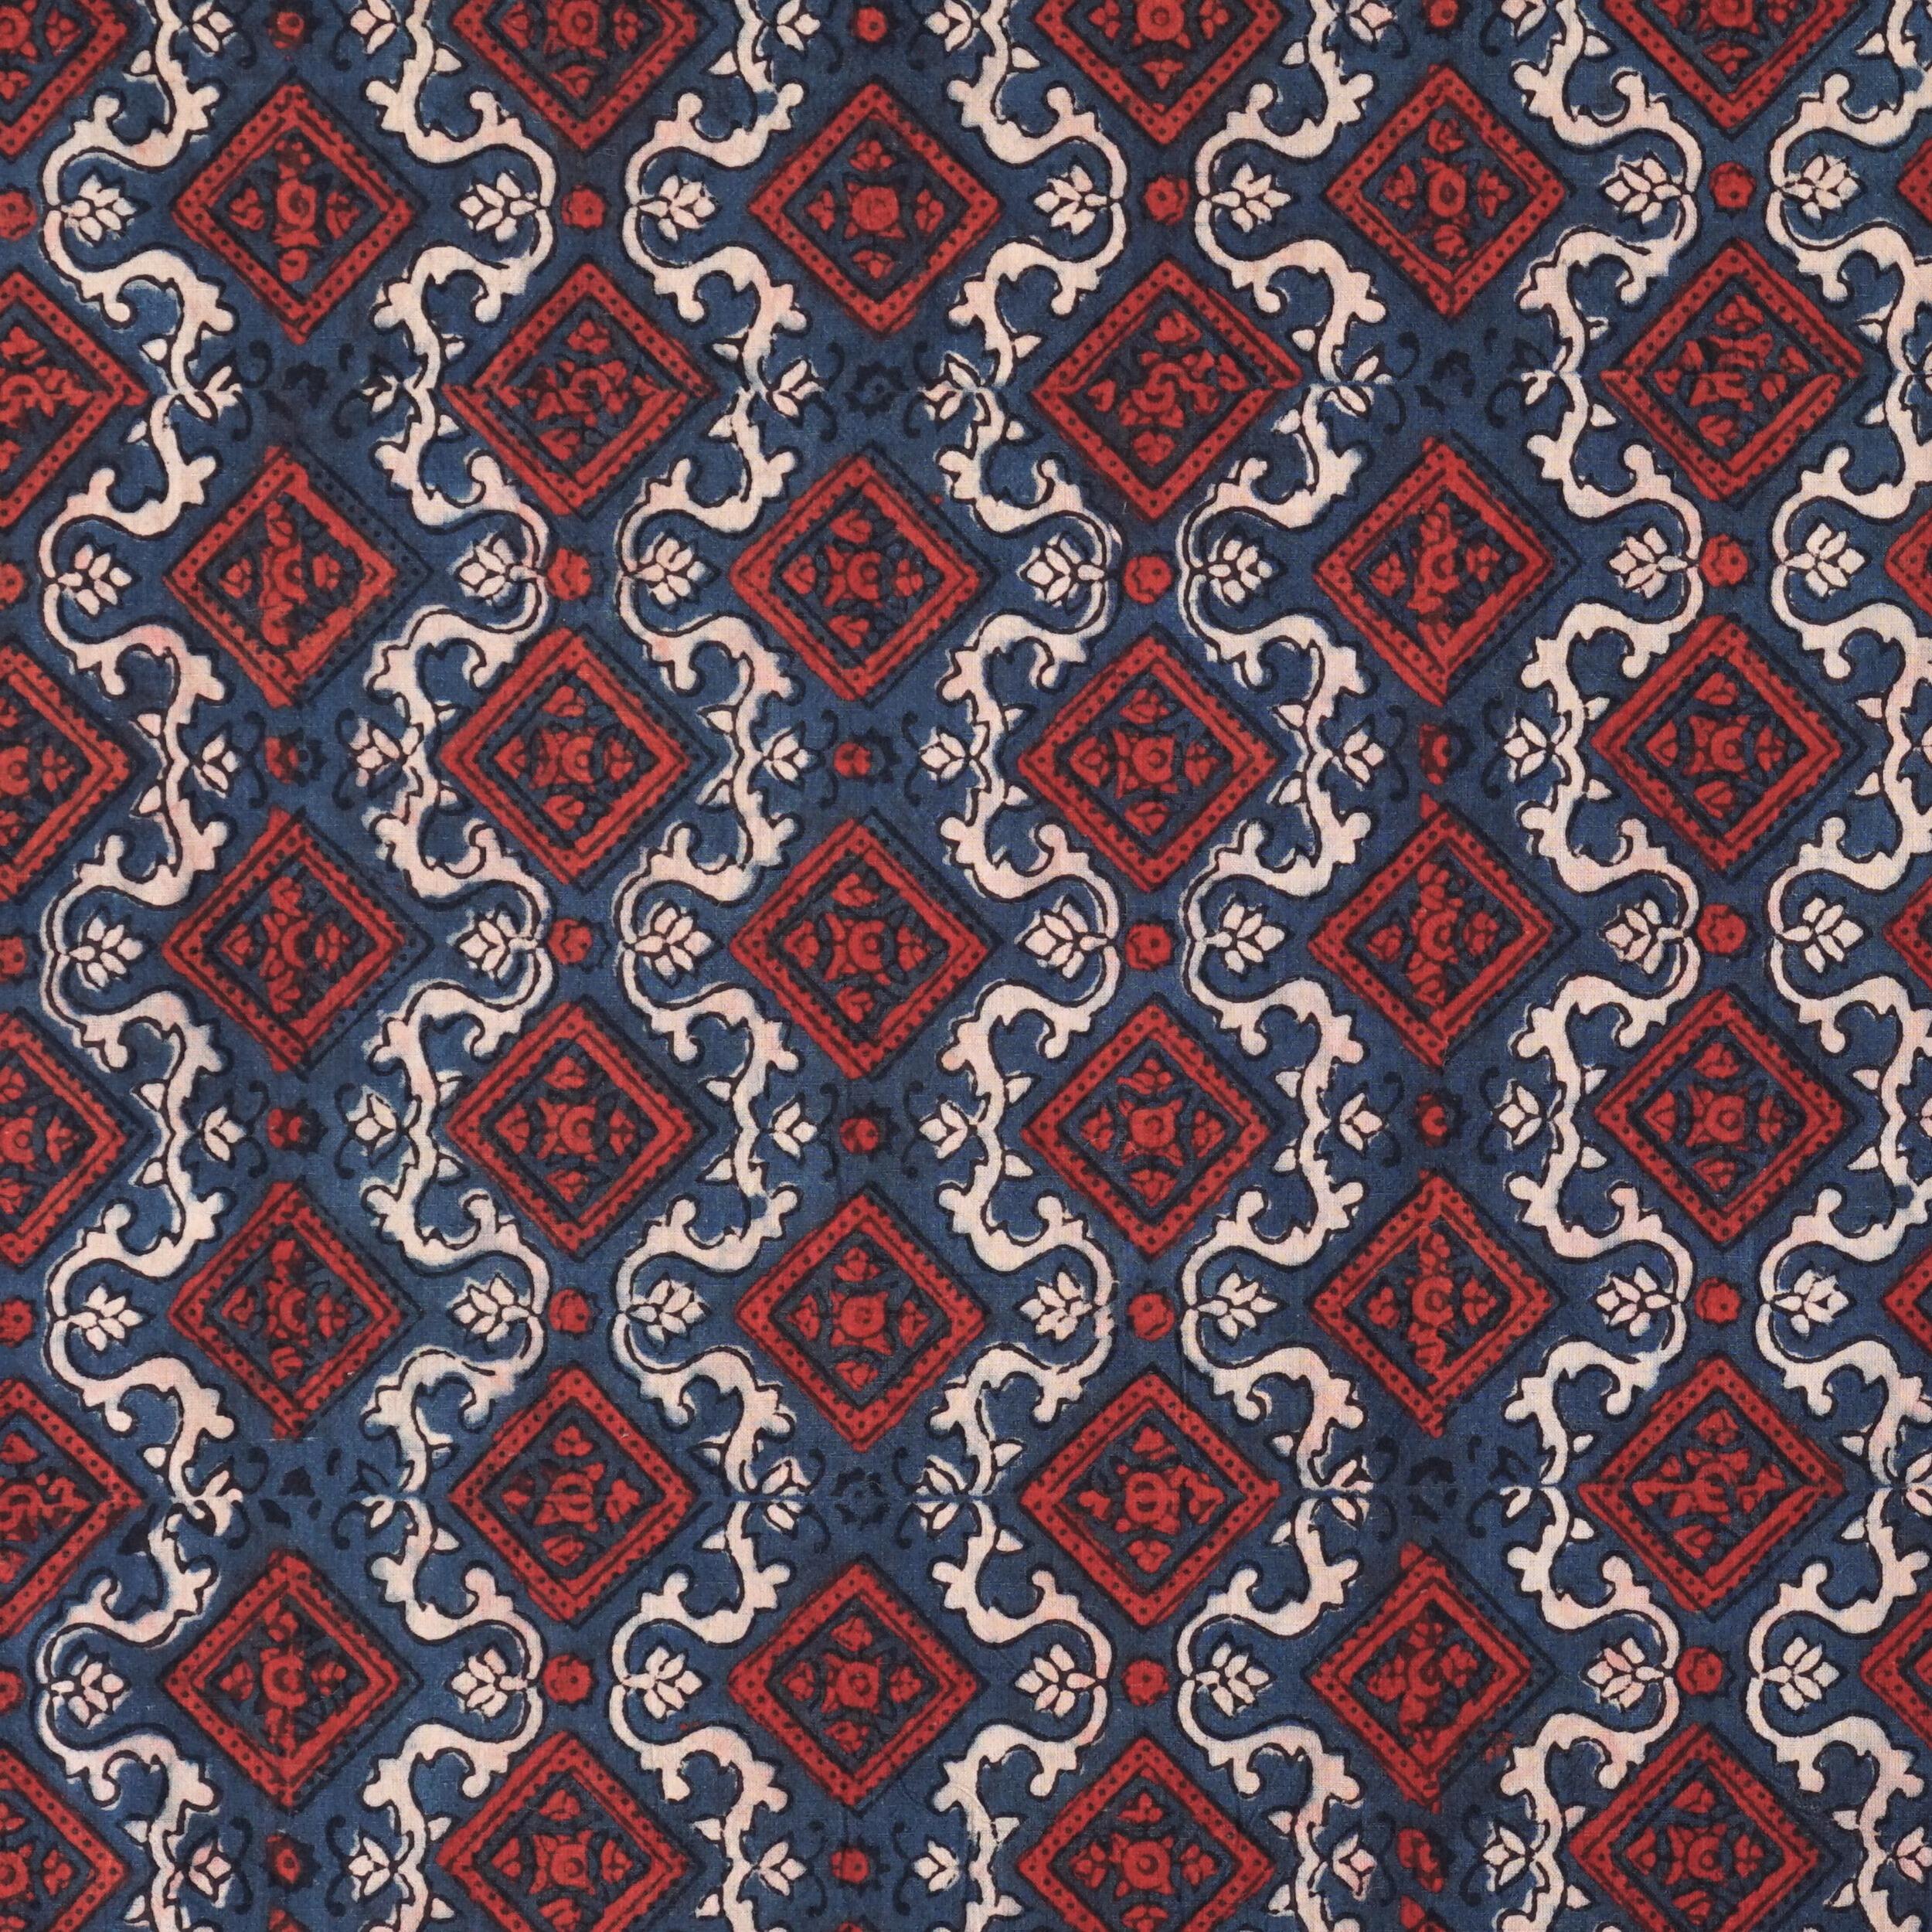 Block Printed Fabric, 100% Cotton, Ajrak Design: Blue Base, White Vine, Red Square. Flat